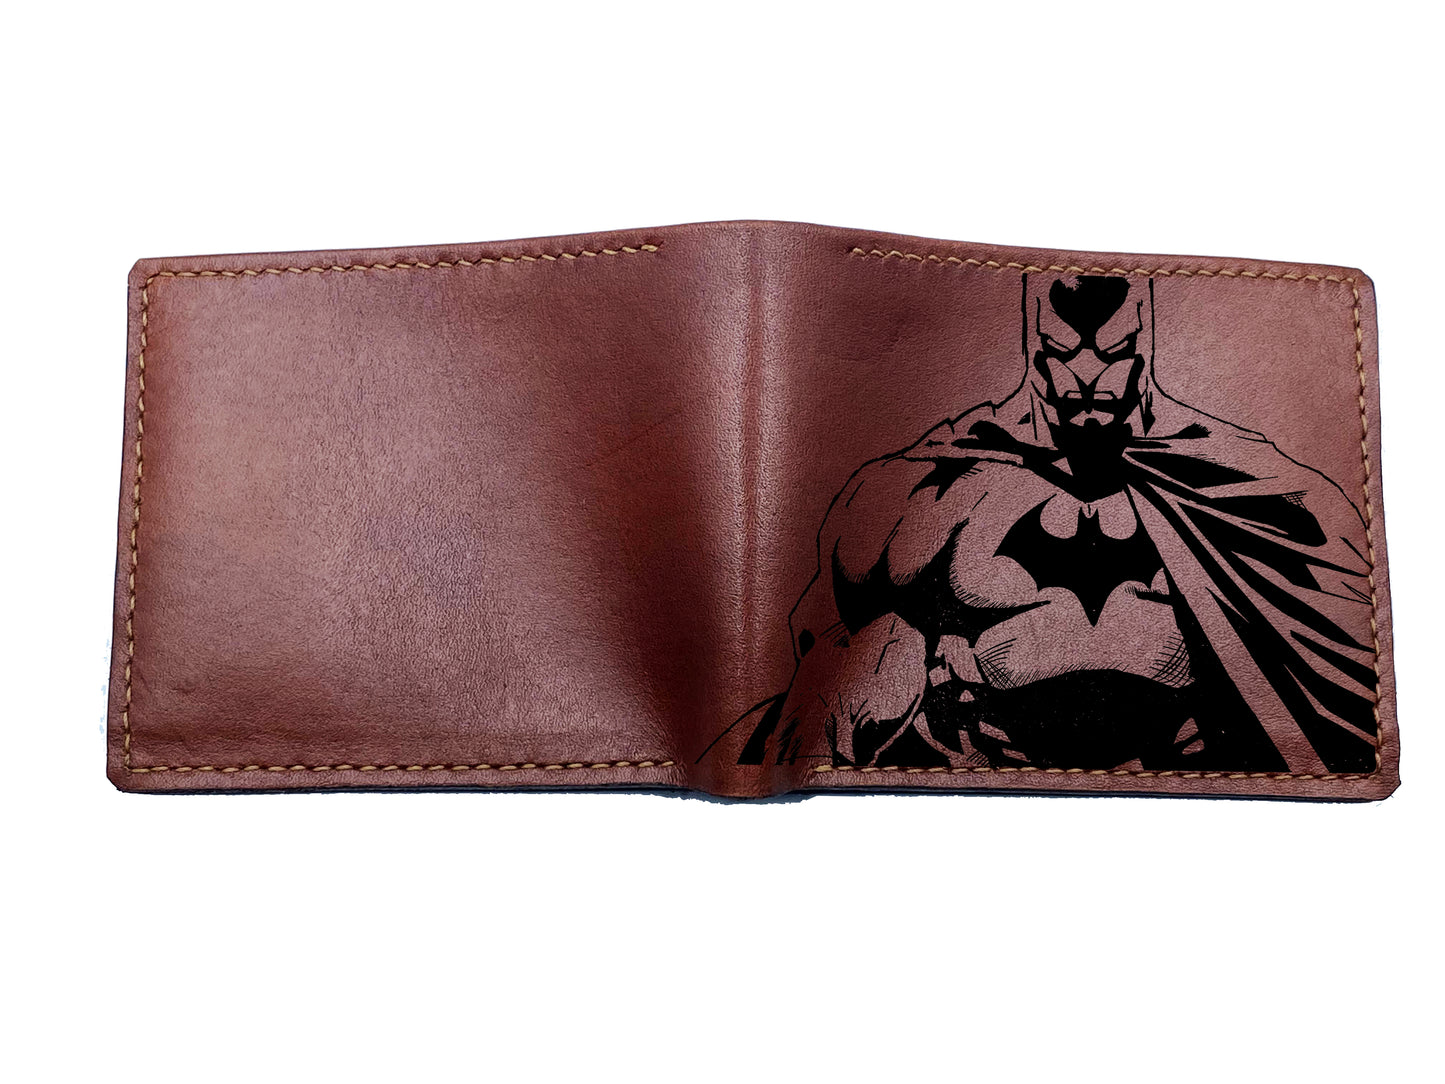 Mayan Corner - Customized leather handmade wallet, Batman superheroes men's wallet, the dark night batman gift idea for father, husband, boyfriend